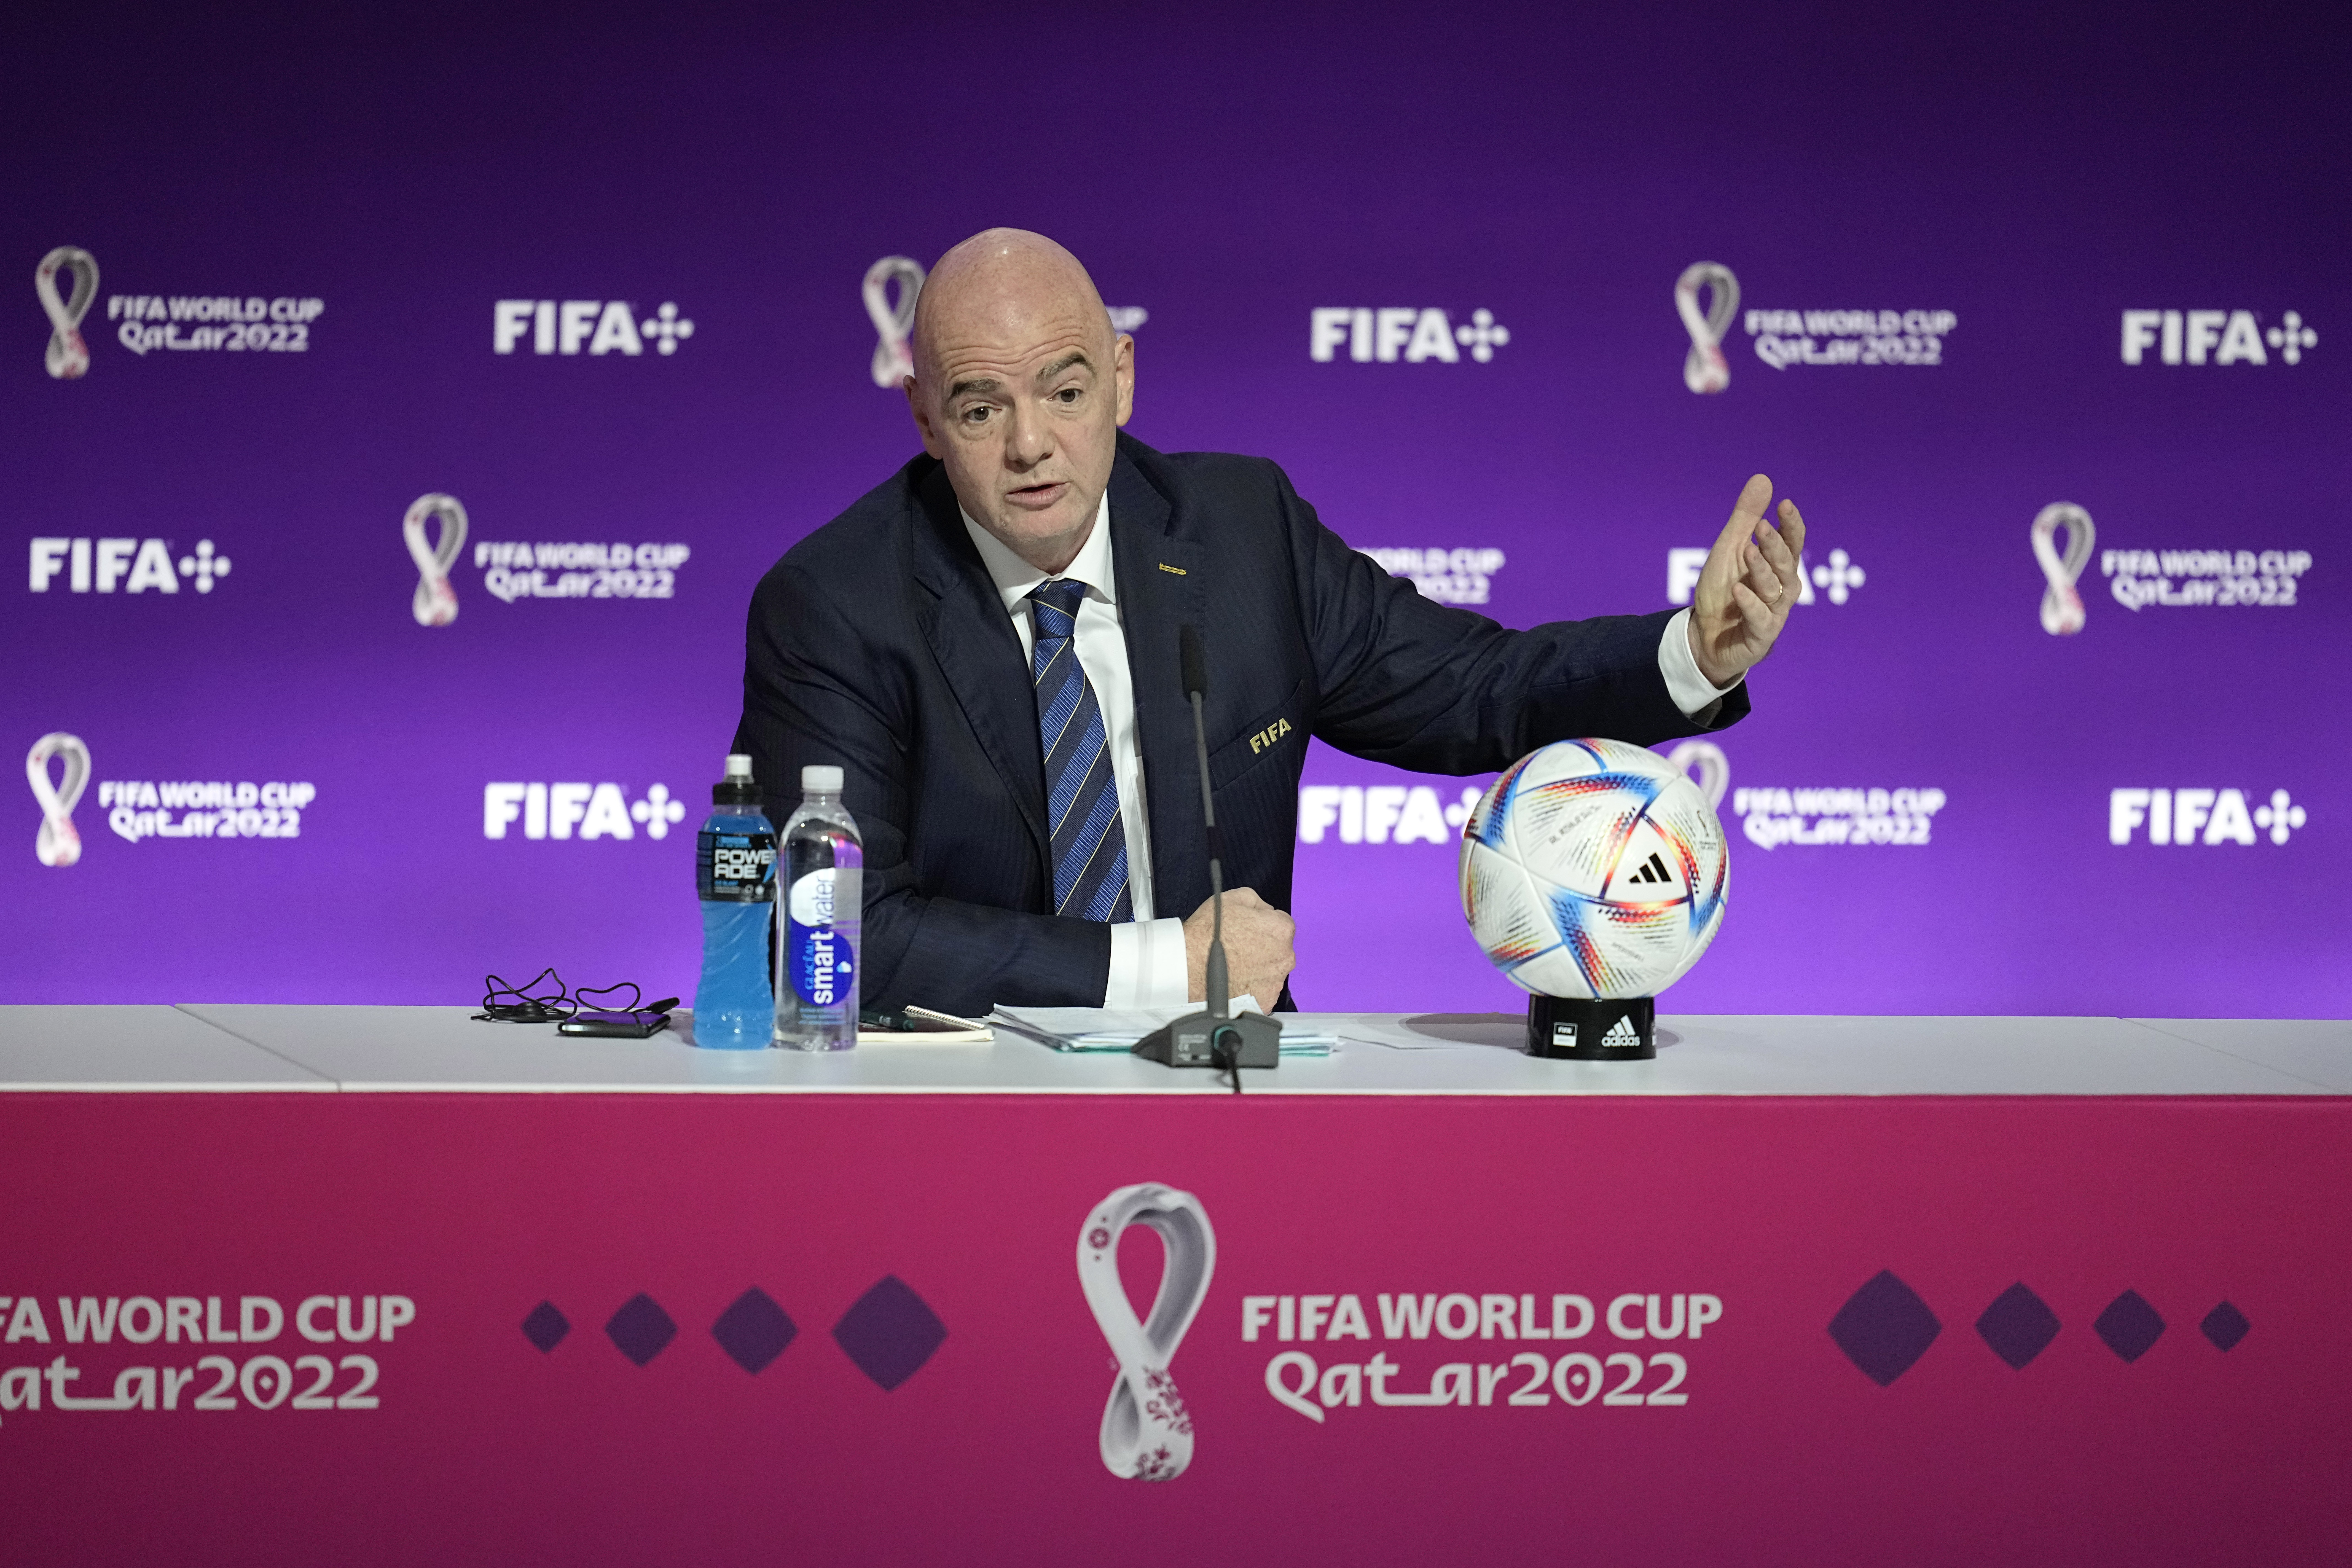 Opinion: Infantino's FIFA — few ethics, lots of money – DW – 11/17/2022